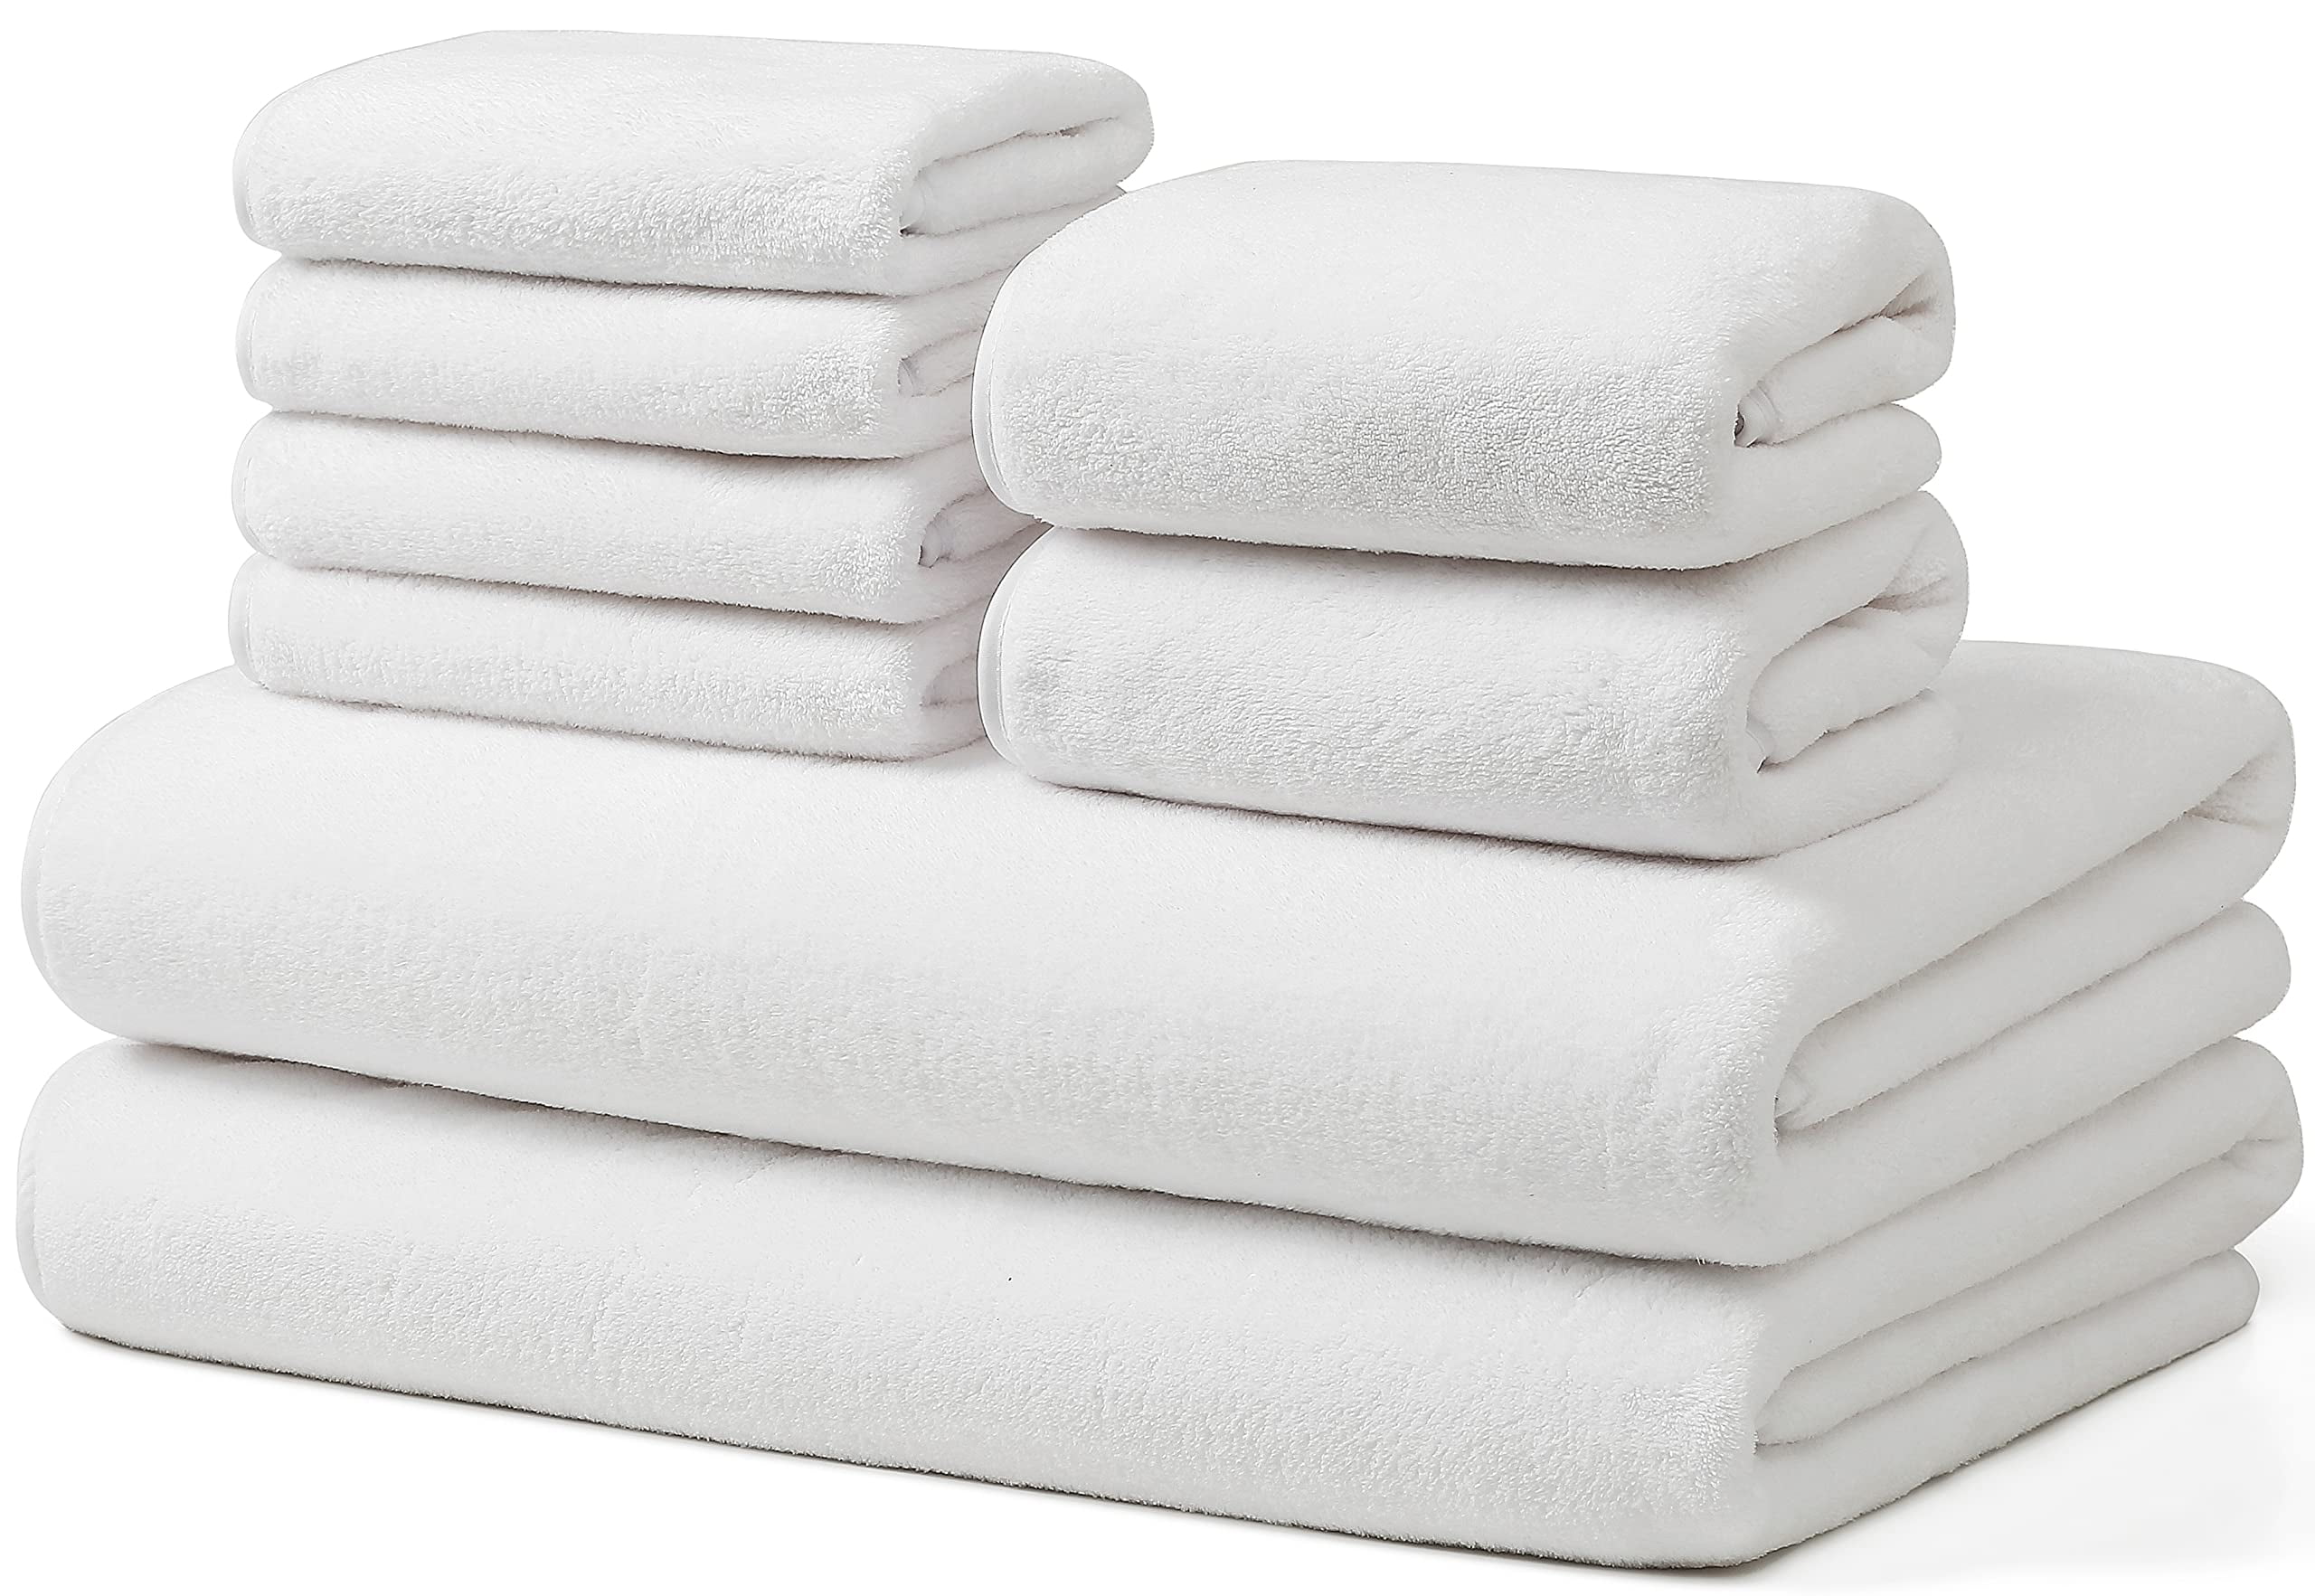  100% Cotton Hotel Quality Luxury Bath Towels For Bathroom-Quick  Dry, Gym Shower Towels - 2 Large Bath Towels, 4 Soft Hand Towels, And 4  Wash Towels For Body And Face- Platinum